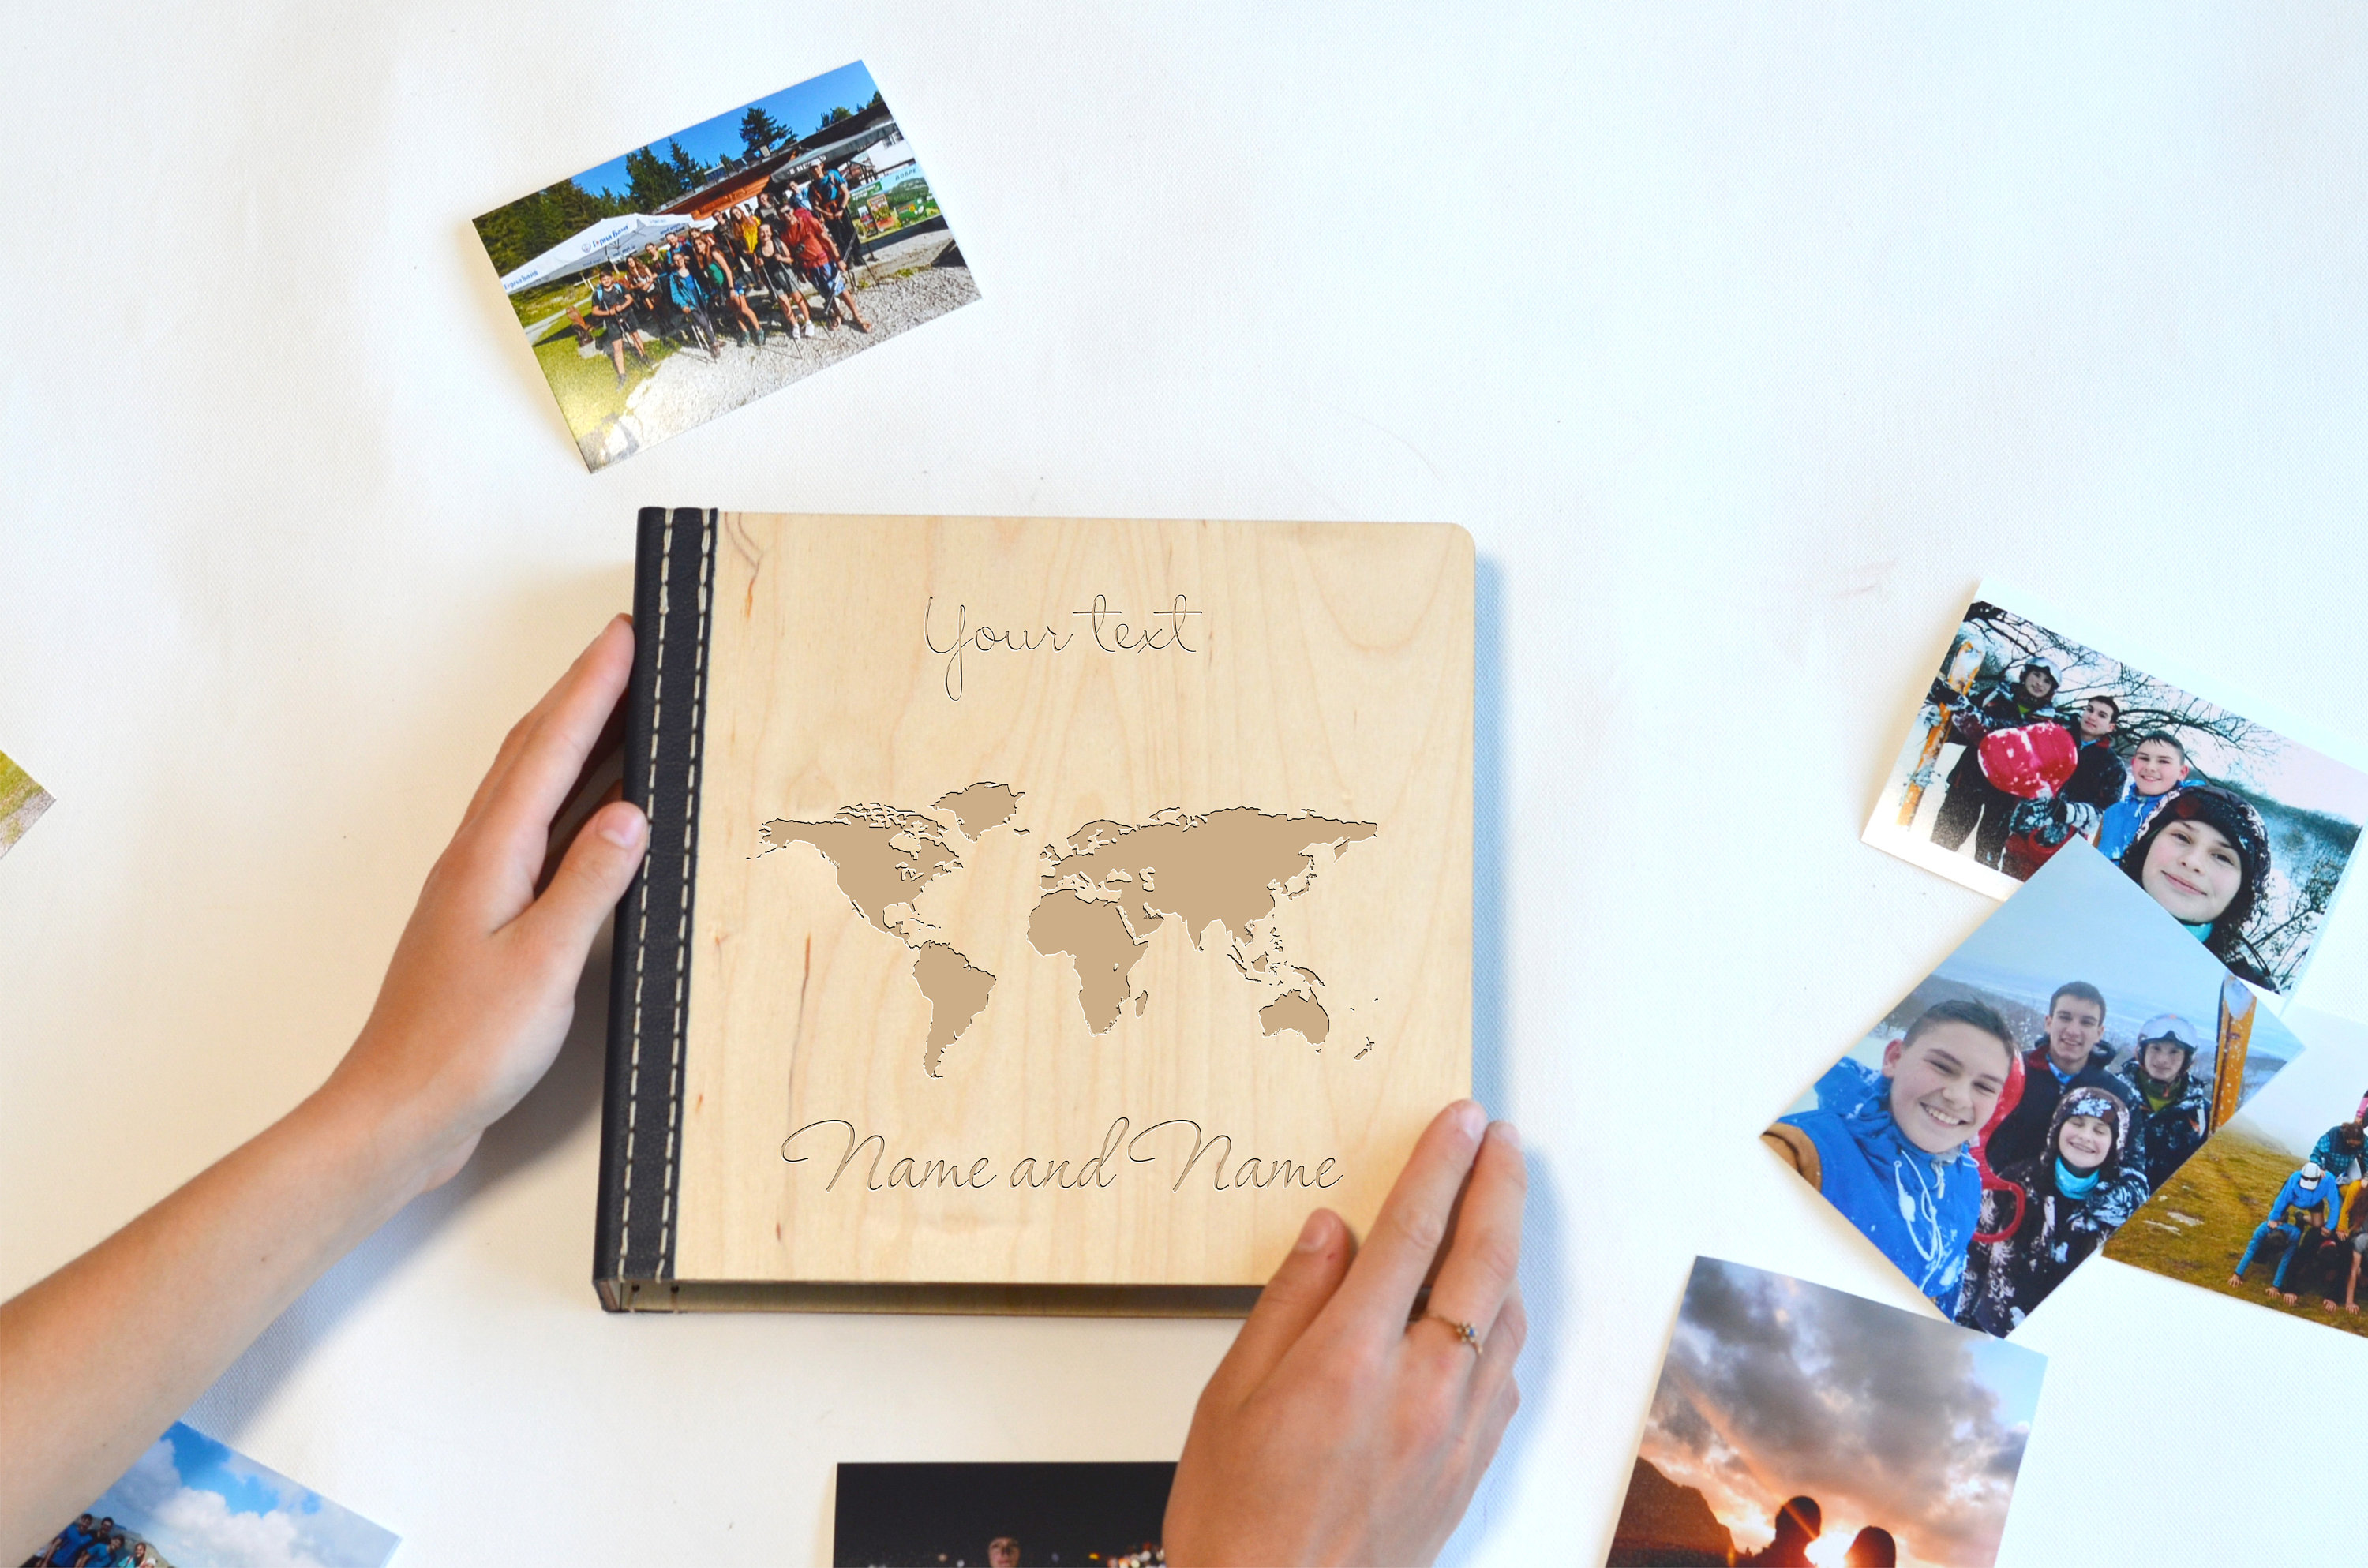 Our Adventure Photo Album, Travel Scrapbook Album, World Map Photo  Guestbook, Wedding Photo Album, Adventure Book for Couples, Anniversary 